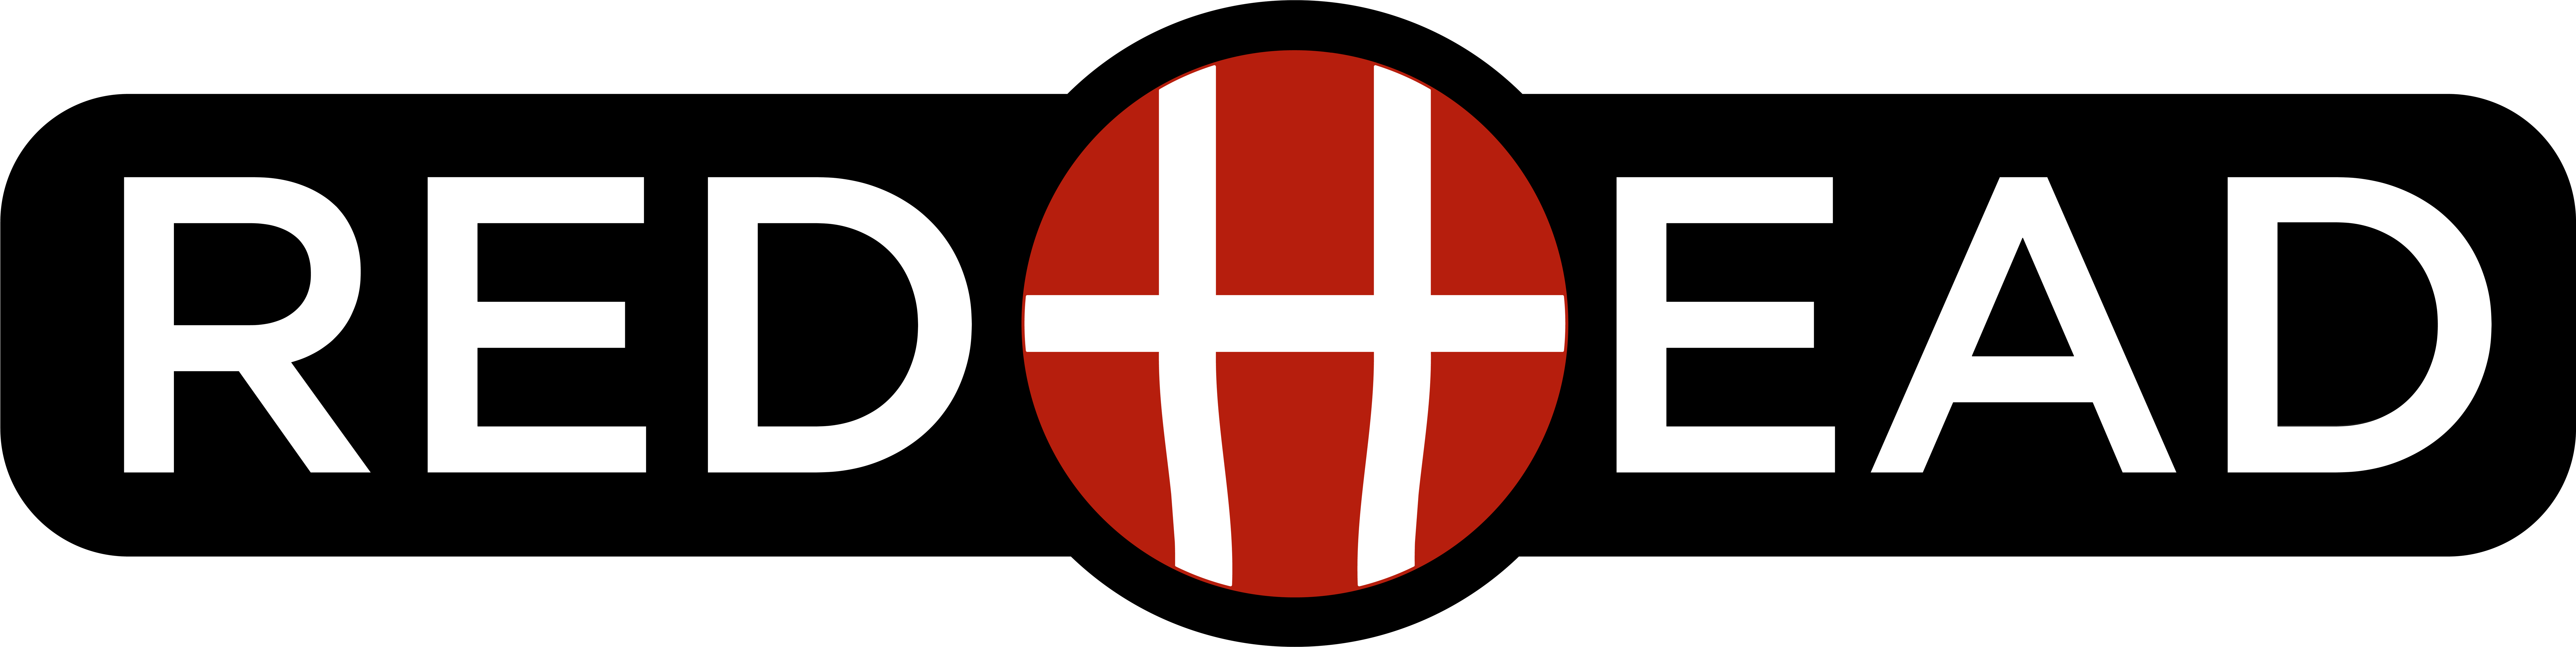 Redhead Brand Logo PNG image